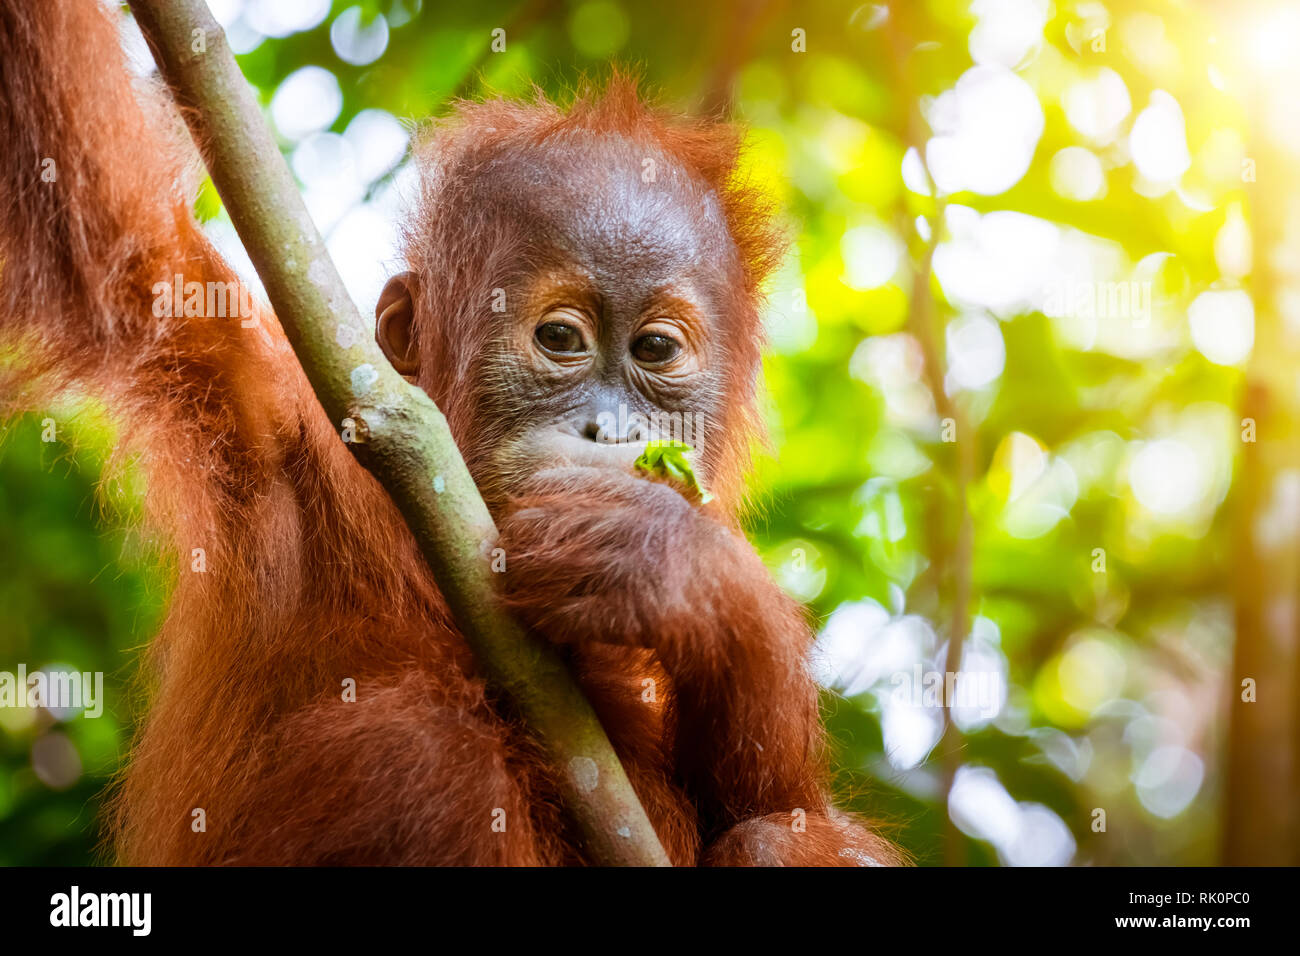 Animals in wild. Orangutan cute baby in tropical rainforest ...